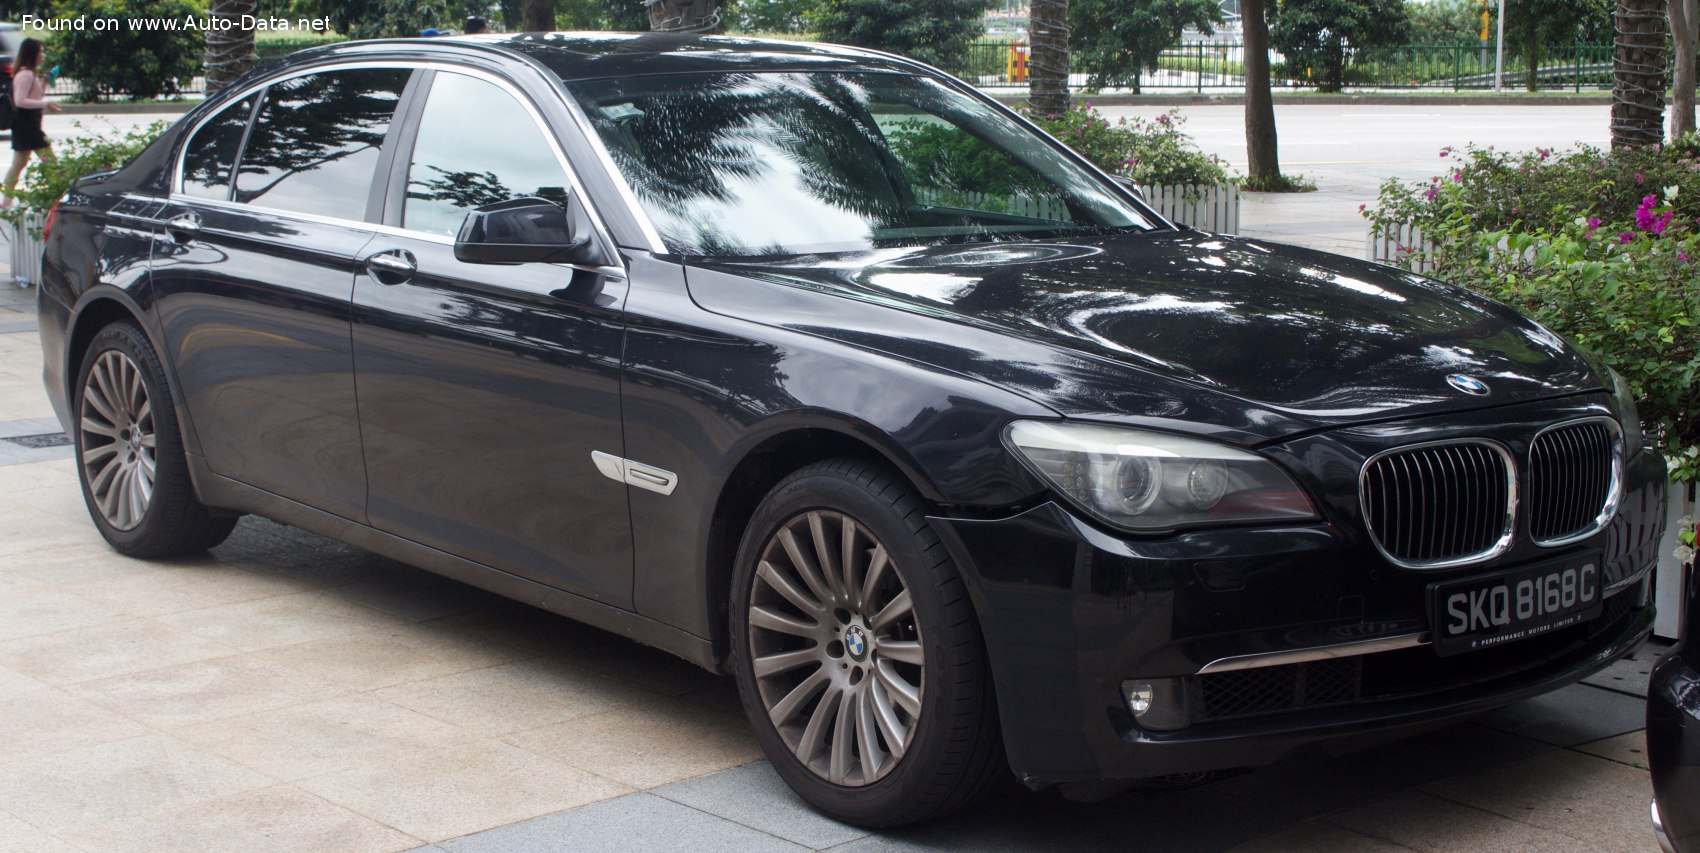 2008 BMW 7 Series Long (F02) 760Li (544 Hp) Steptronic | Technical specs,  data, fuel consumption, Dimensions